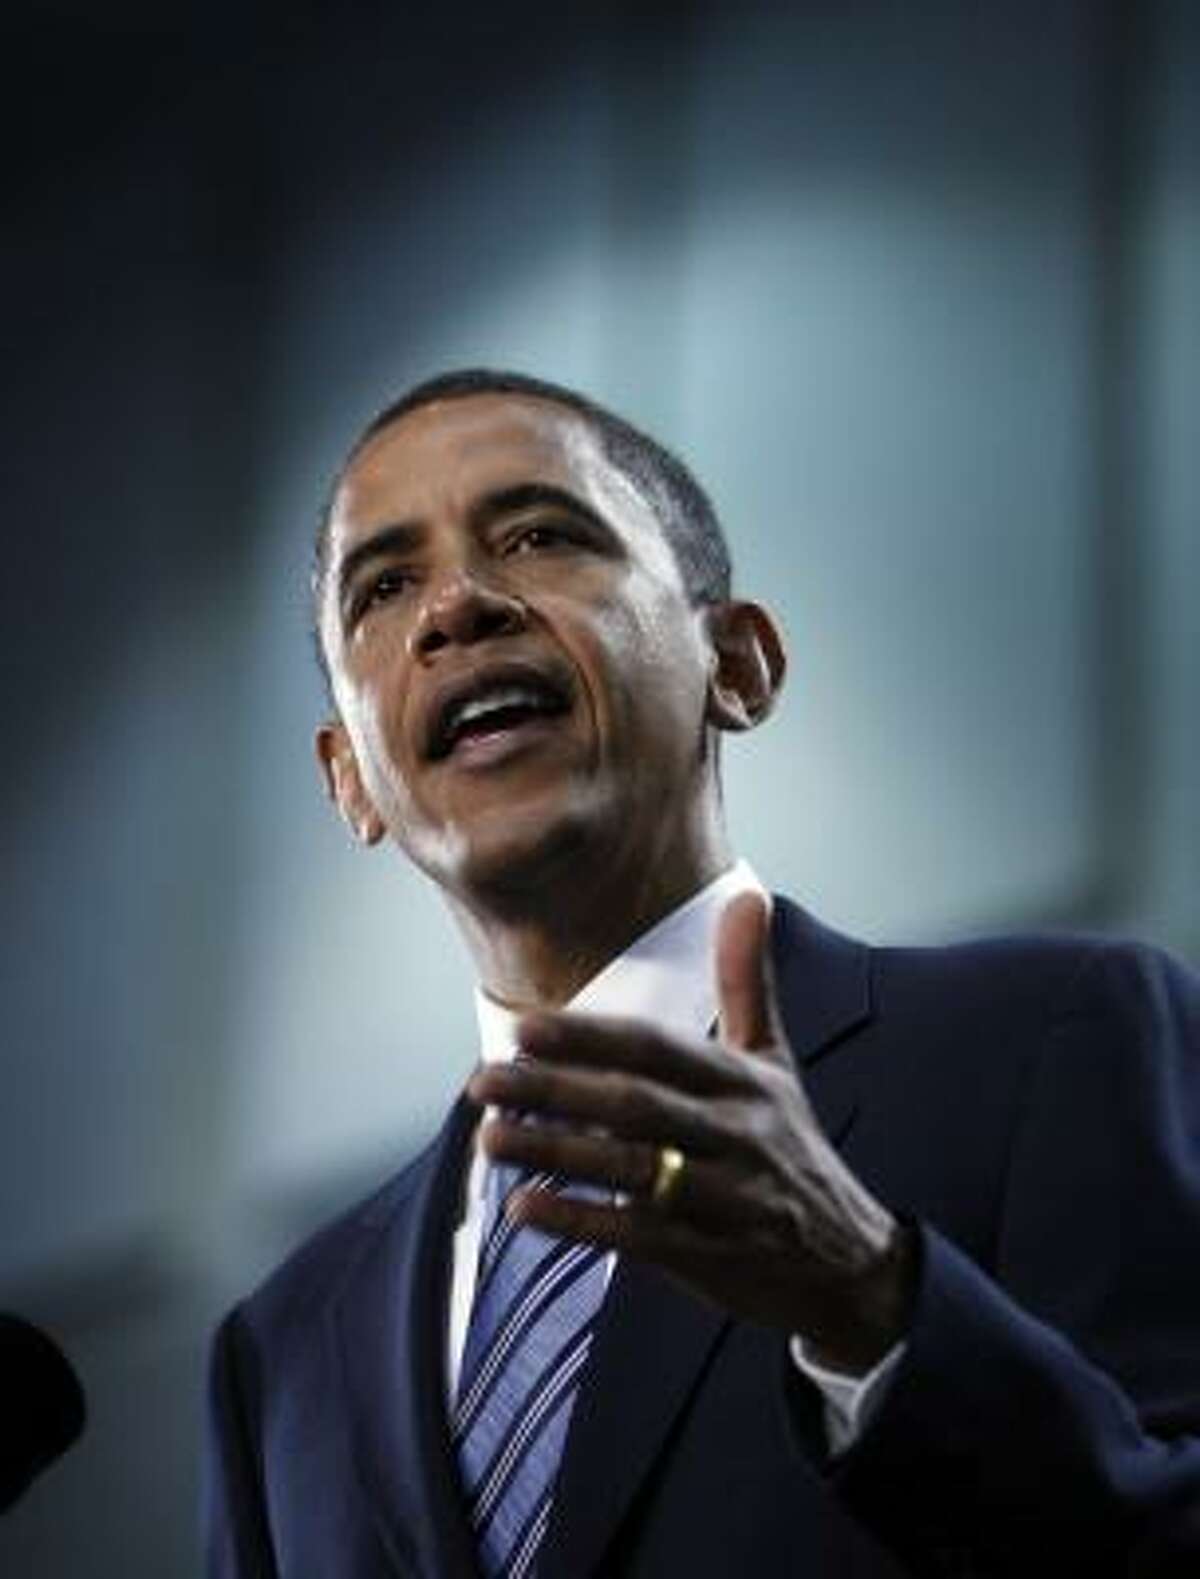 The Chronicle endorses Sen. Barack Obama, D-Ill., for president of the United States.